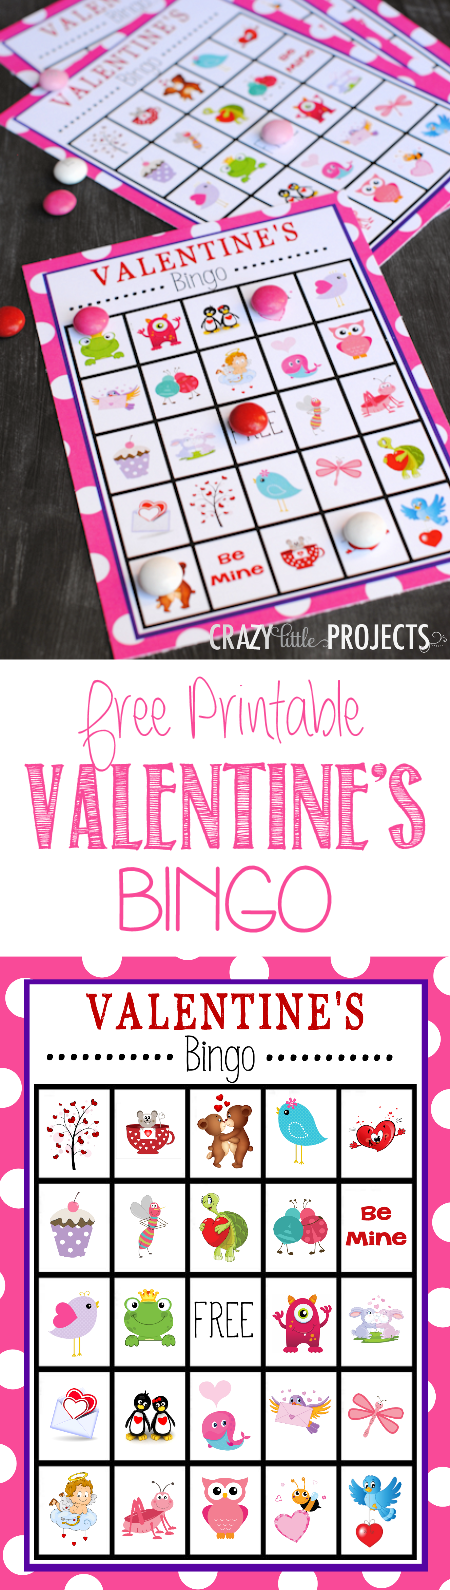 Free Printable Valentine's Bingo Game